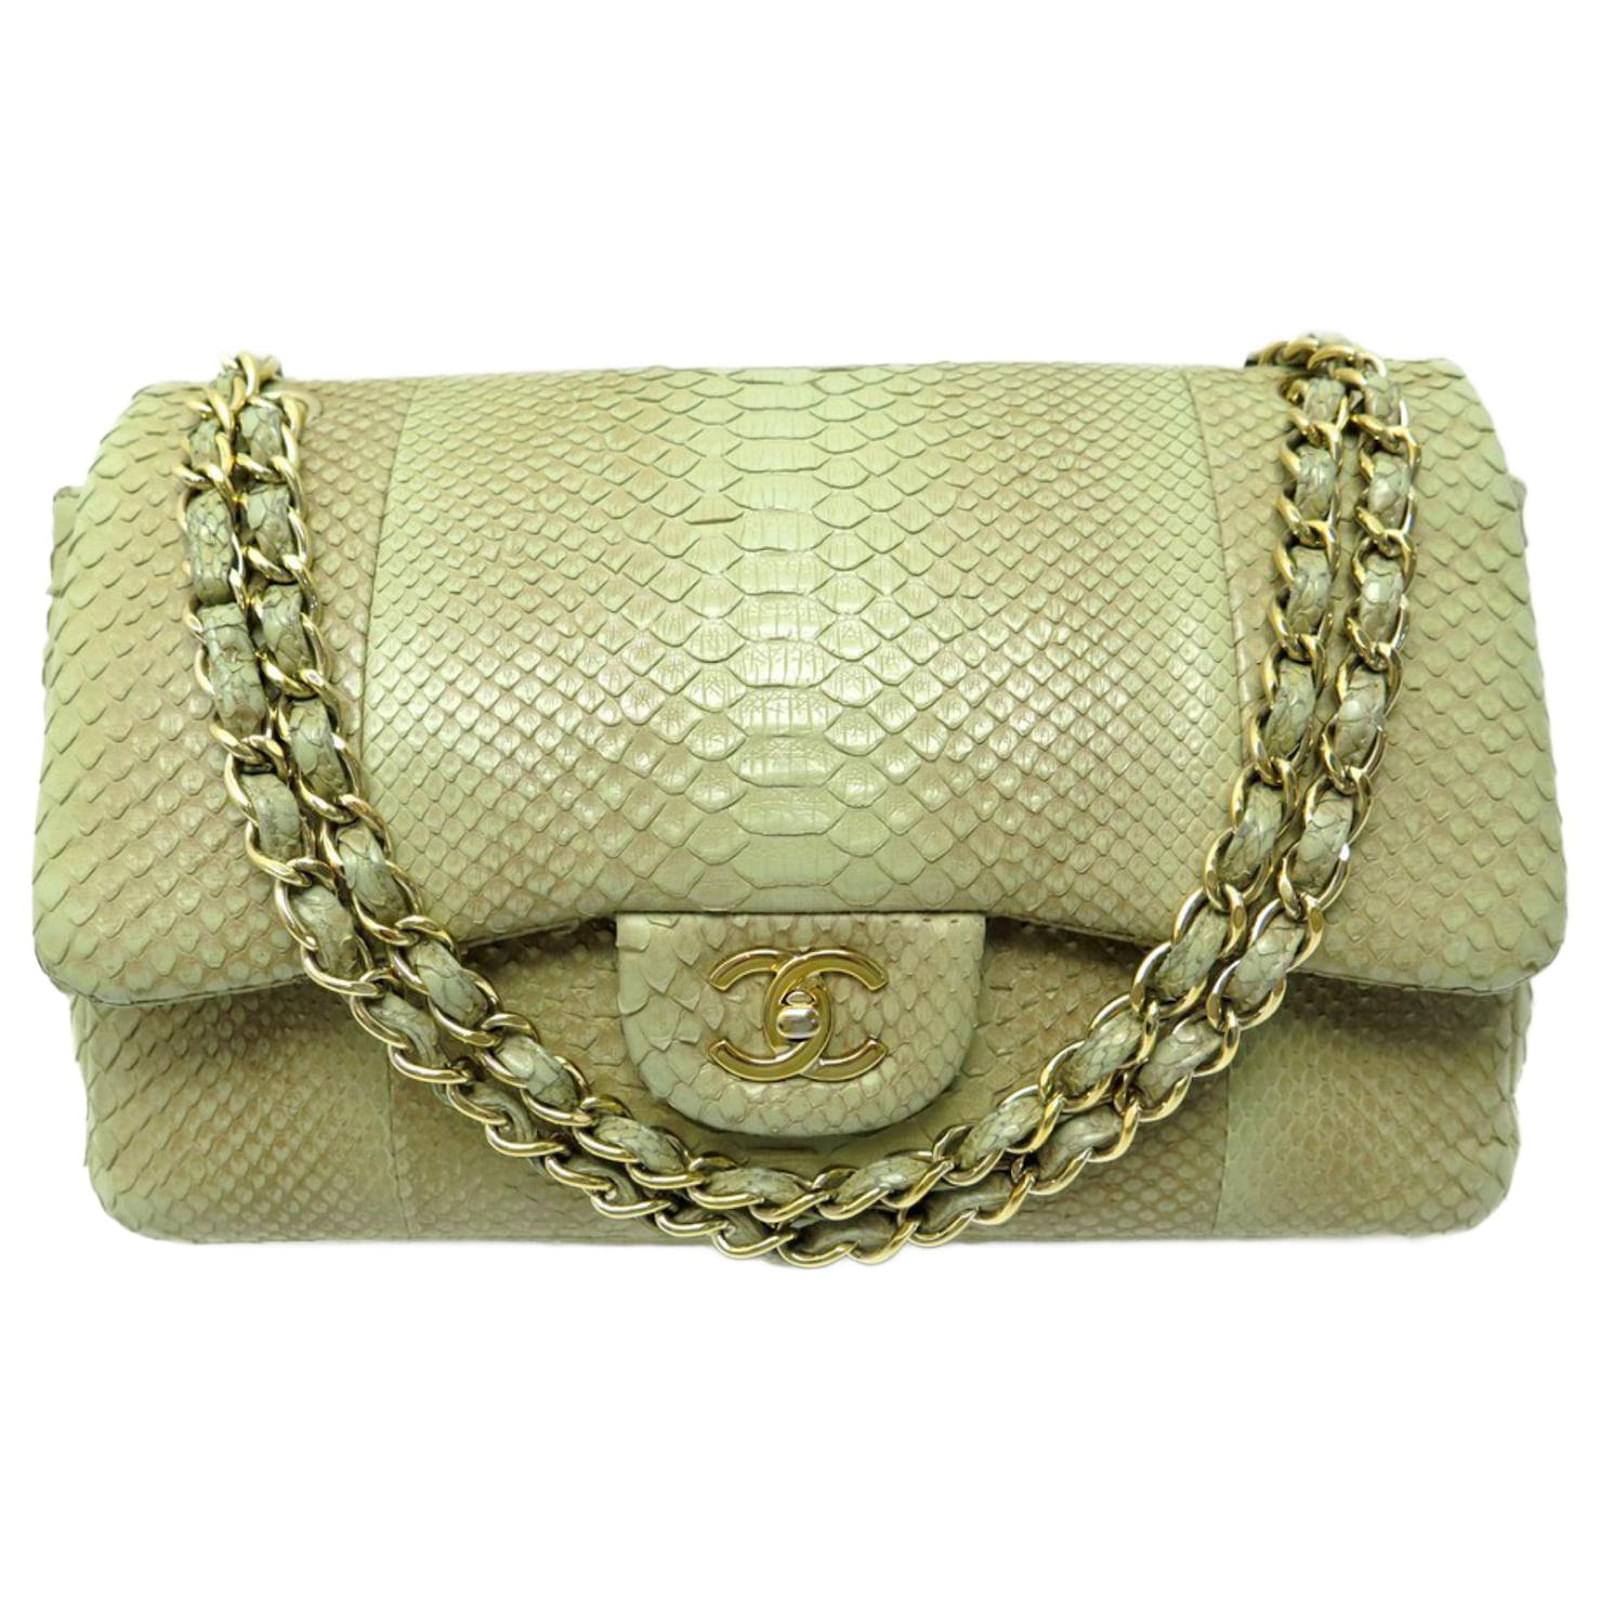 Chanel Large Classic Handbag A58600 Y01588 C3906 , Black, One Size